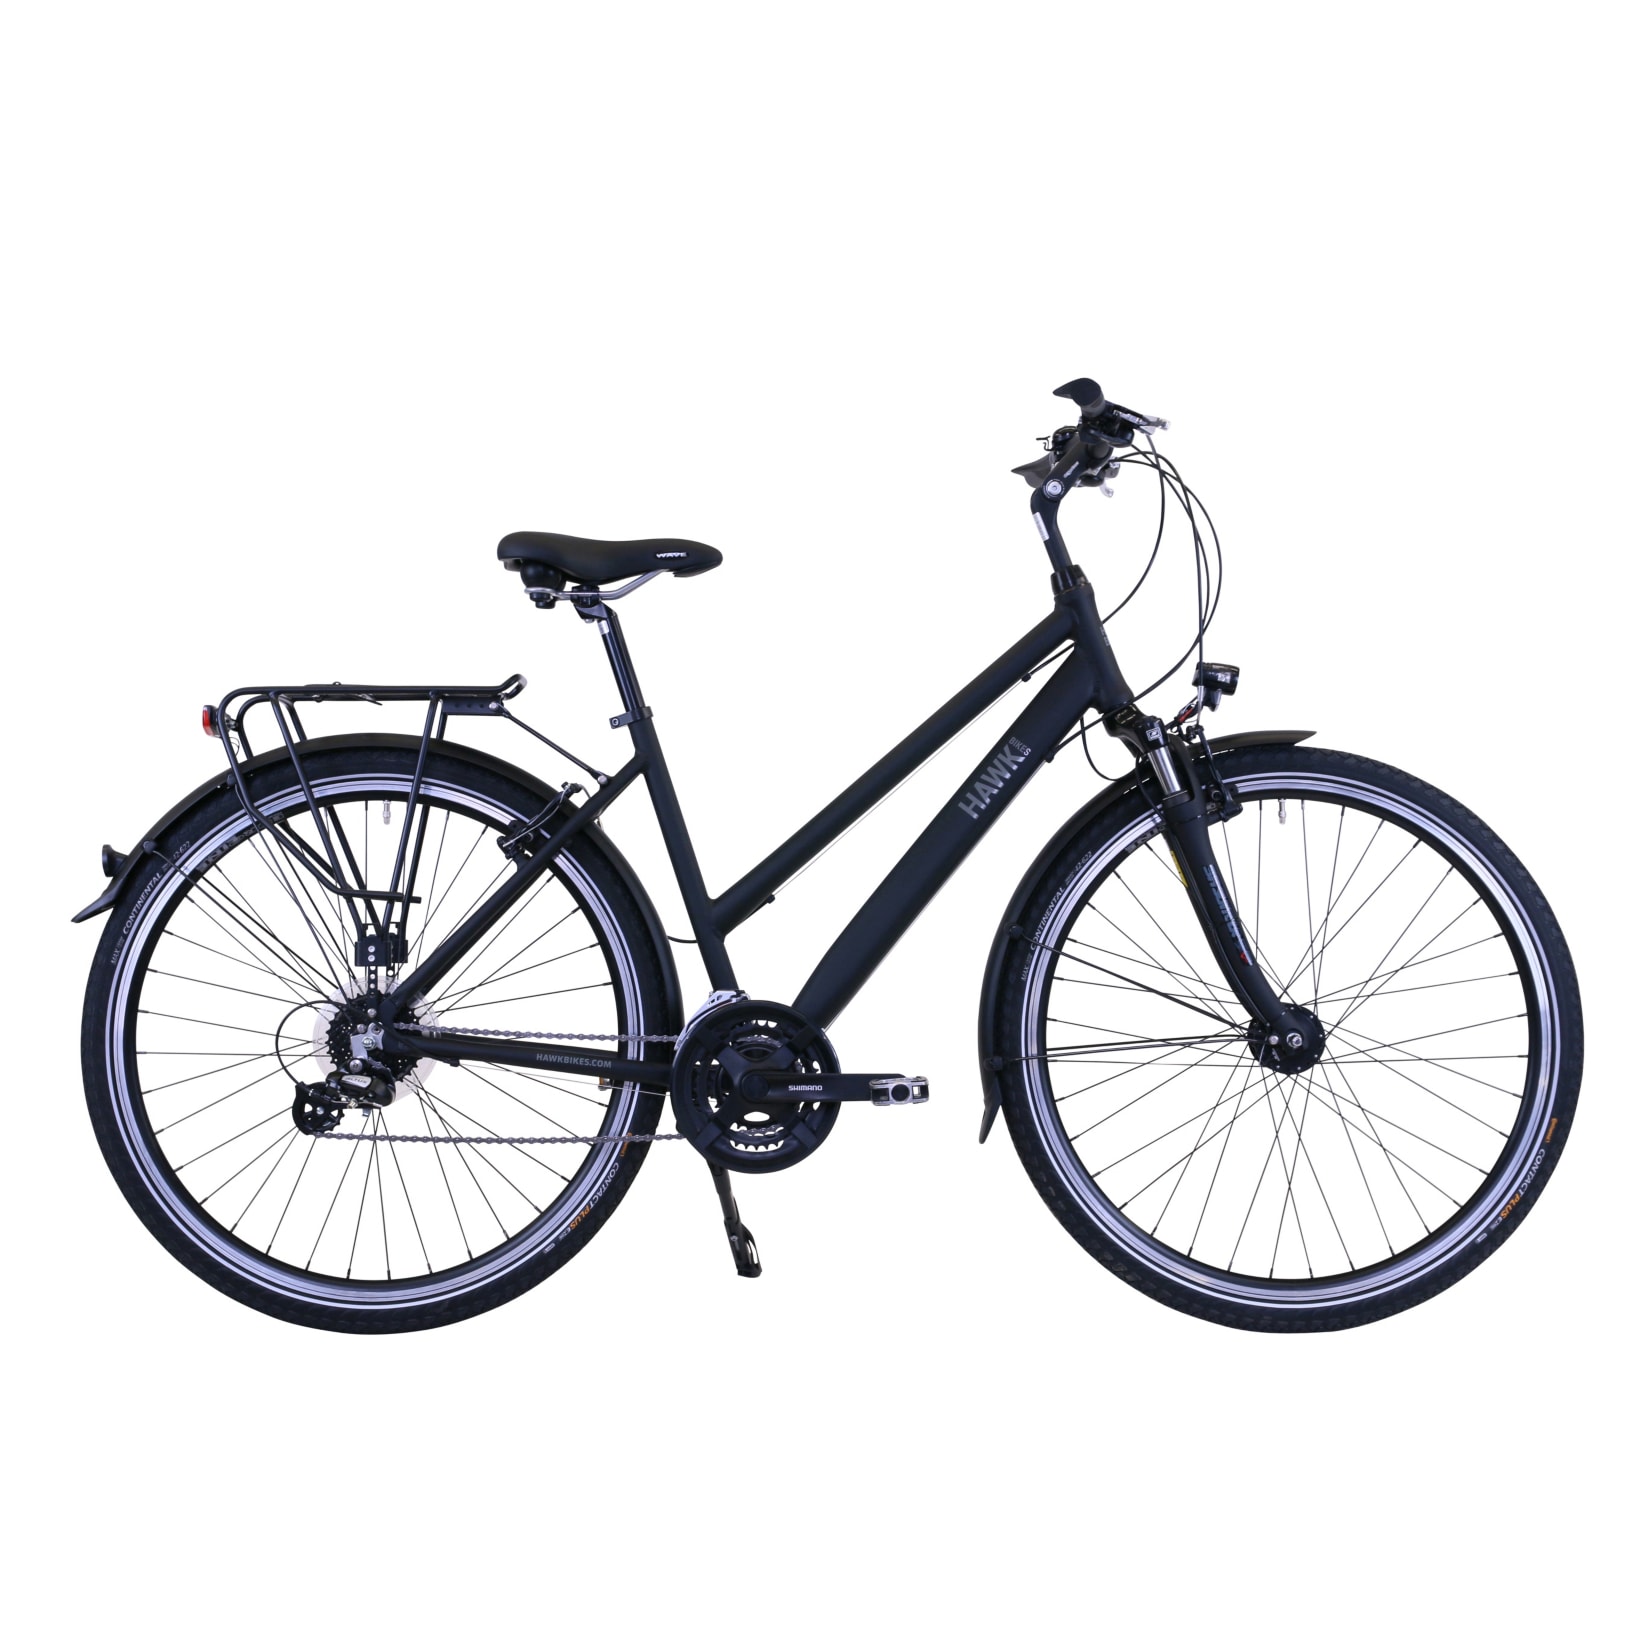 HAWK Trekking Premium Fahrrad , Black Damen 28 Zoll, Rahmenhöhe 44 cm – Fahrrad mit Microshift 24 Gang Kettenschaltung &